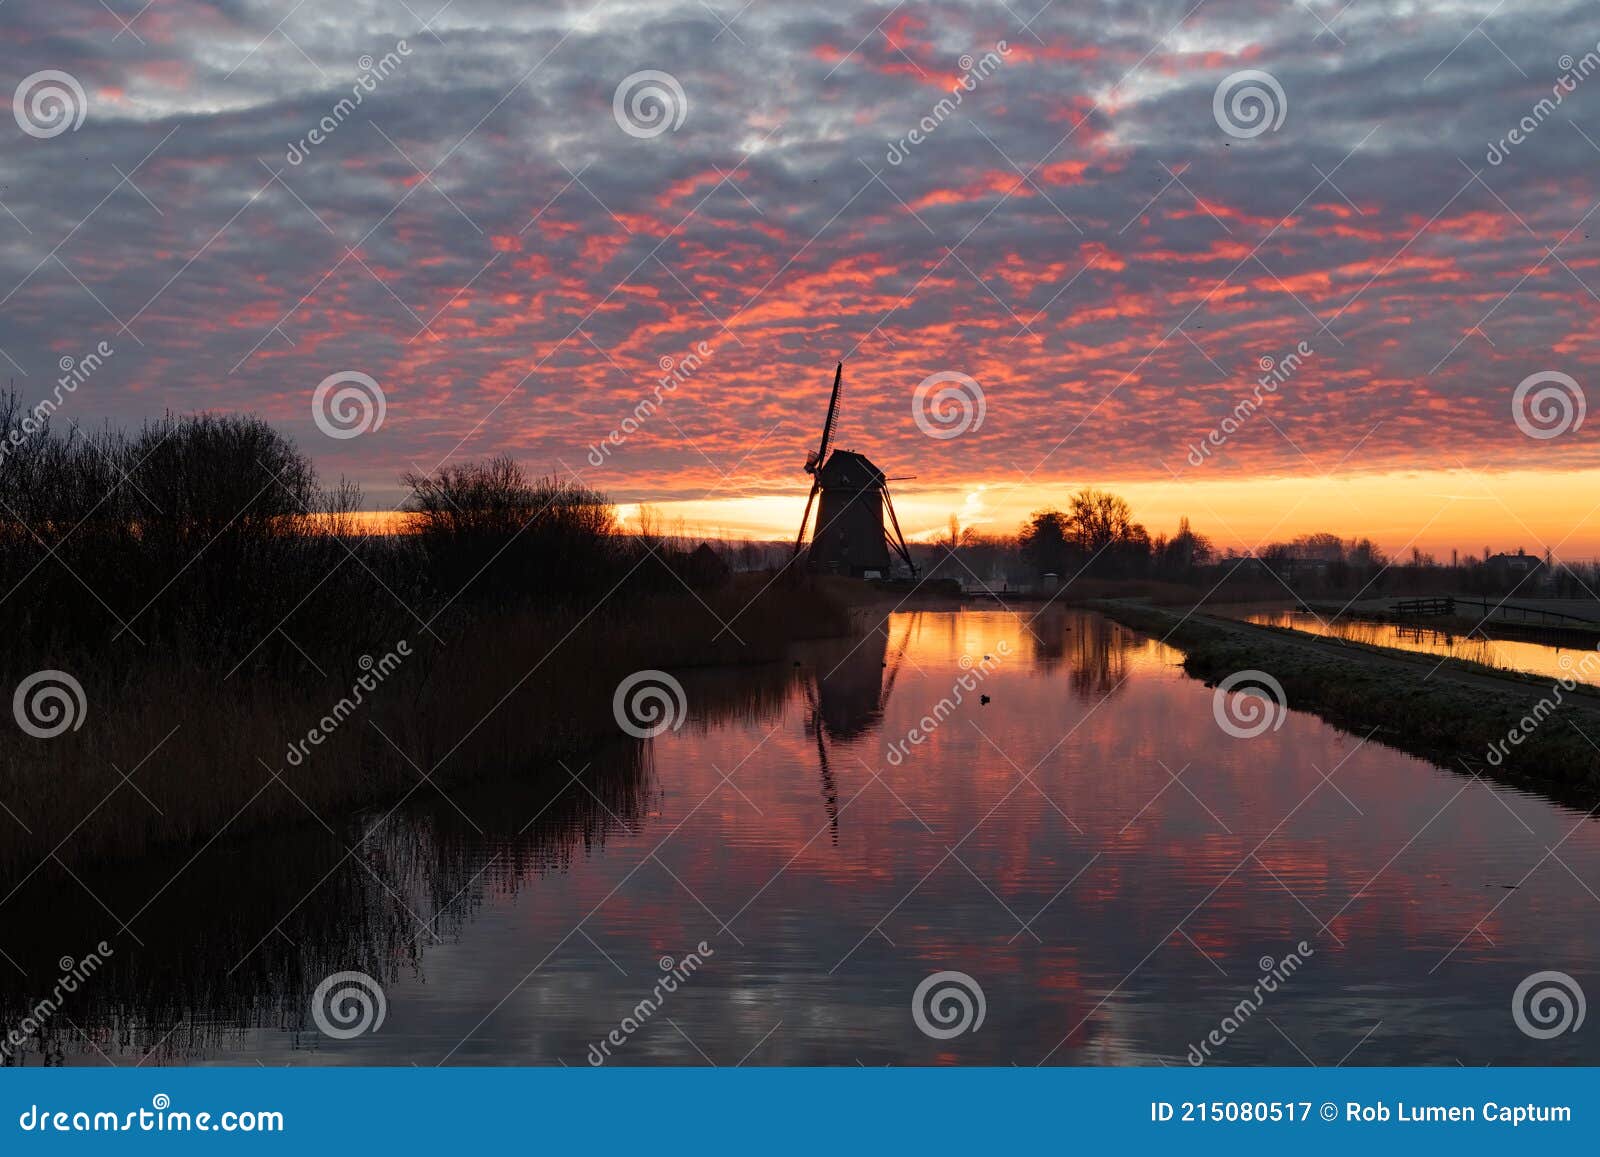 windmill with morning red, de rietveldse molen, hazerswoude dorp